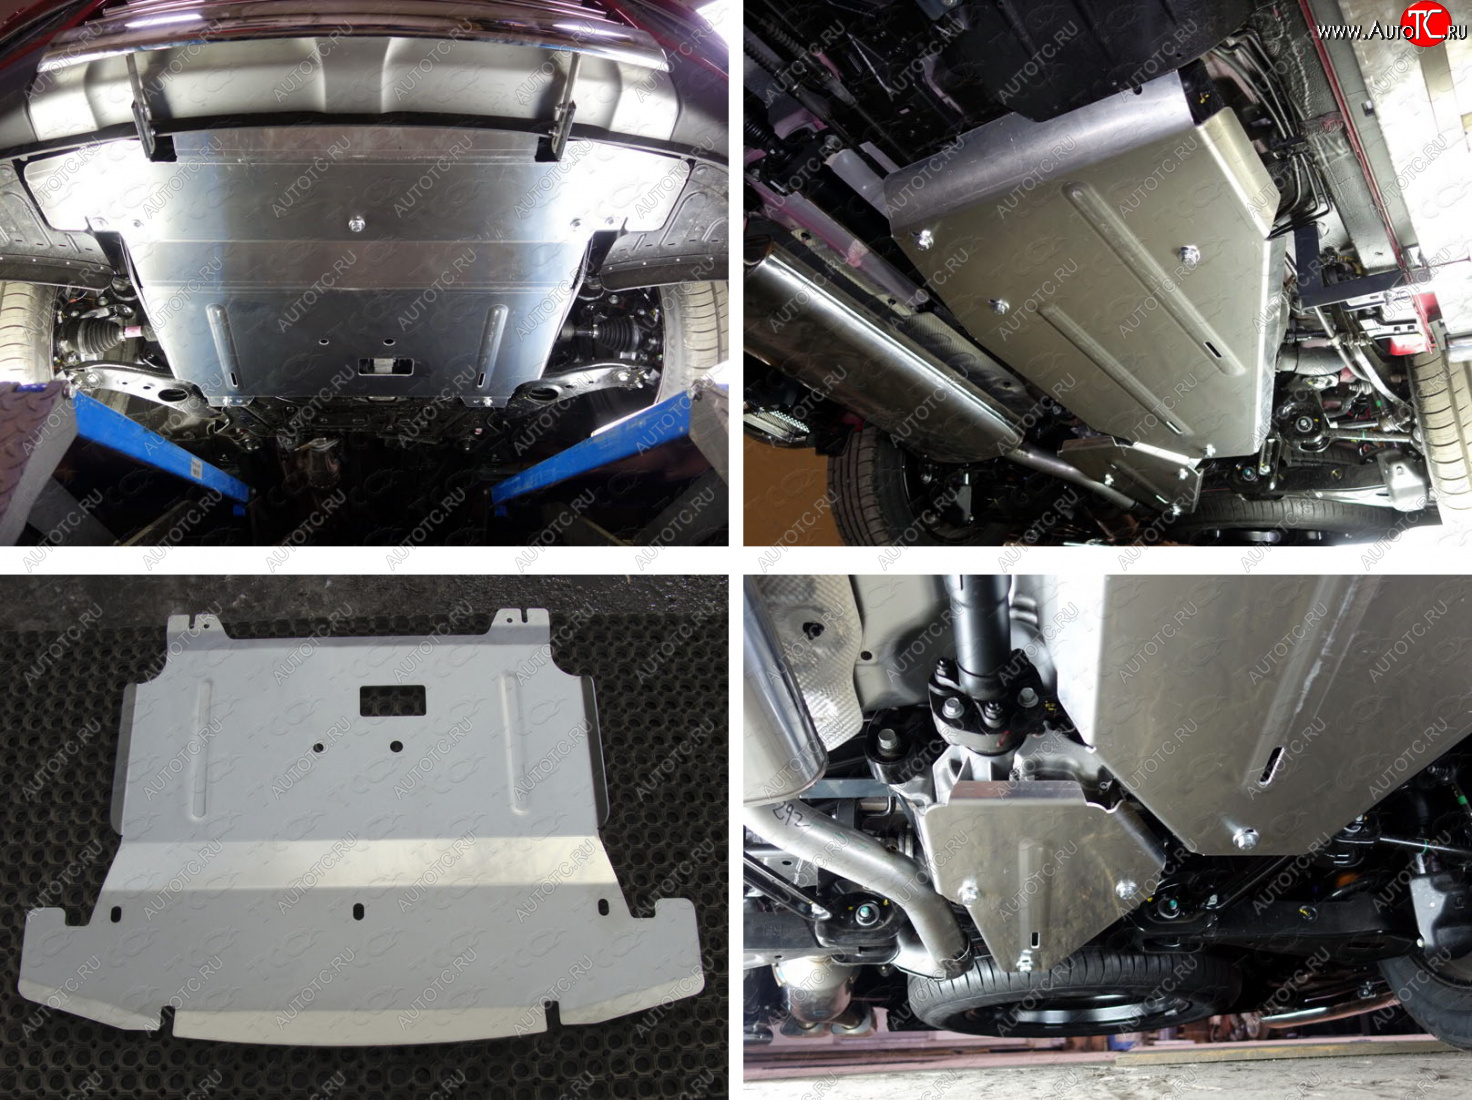 32 999 р. Защиты комплект (картер, кпп, дифференциал, бак) ТСС Тюнинг  Hyundai Grand Santa Fe  1 DM (2013-2018) (алюминий 4 мм)  с доставкой в г. Калуга